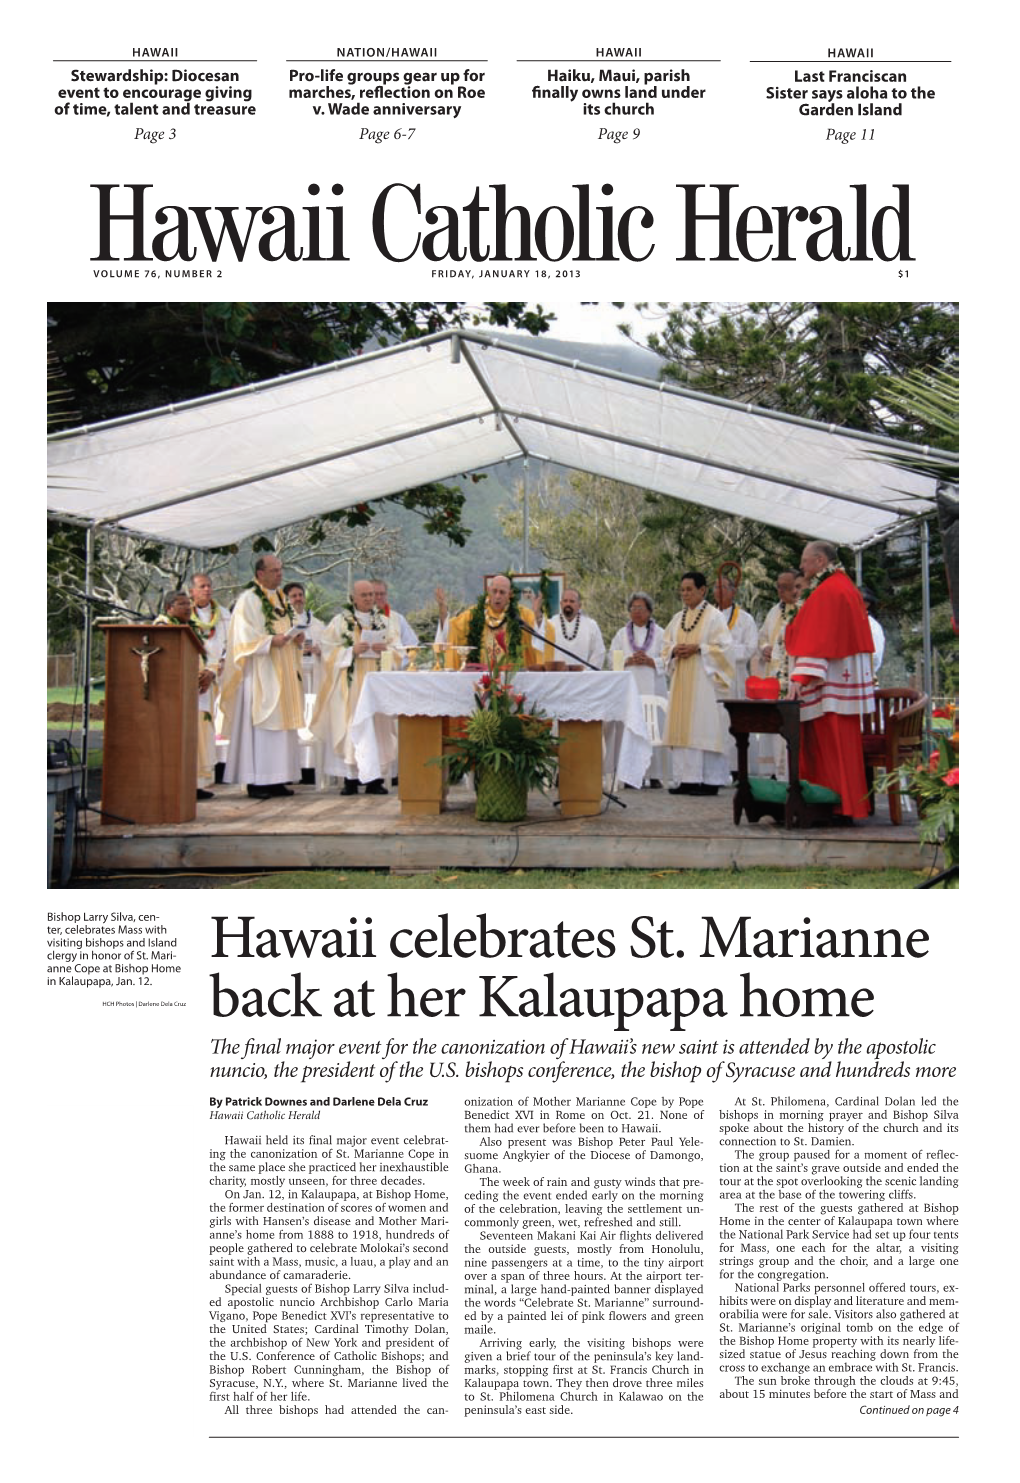 Hawaii Celebrates St. Marianne Back at Her Kalaupapa Home